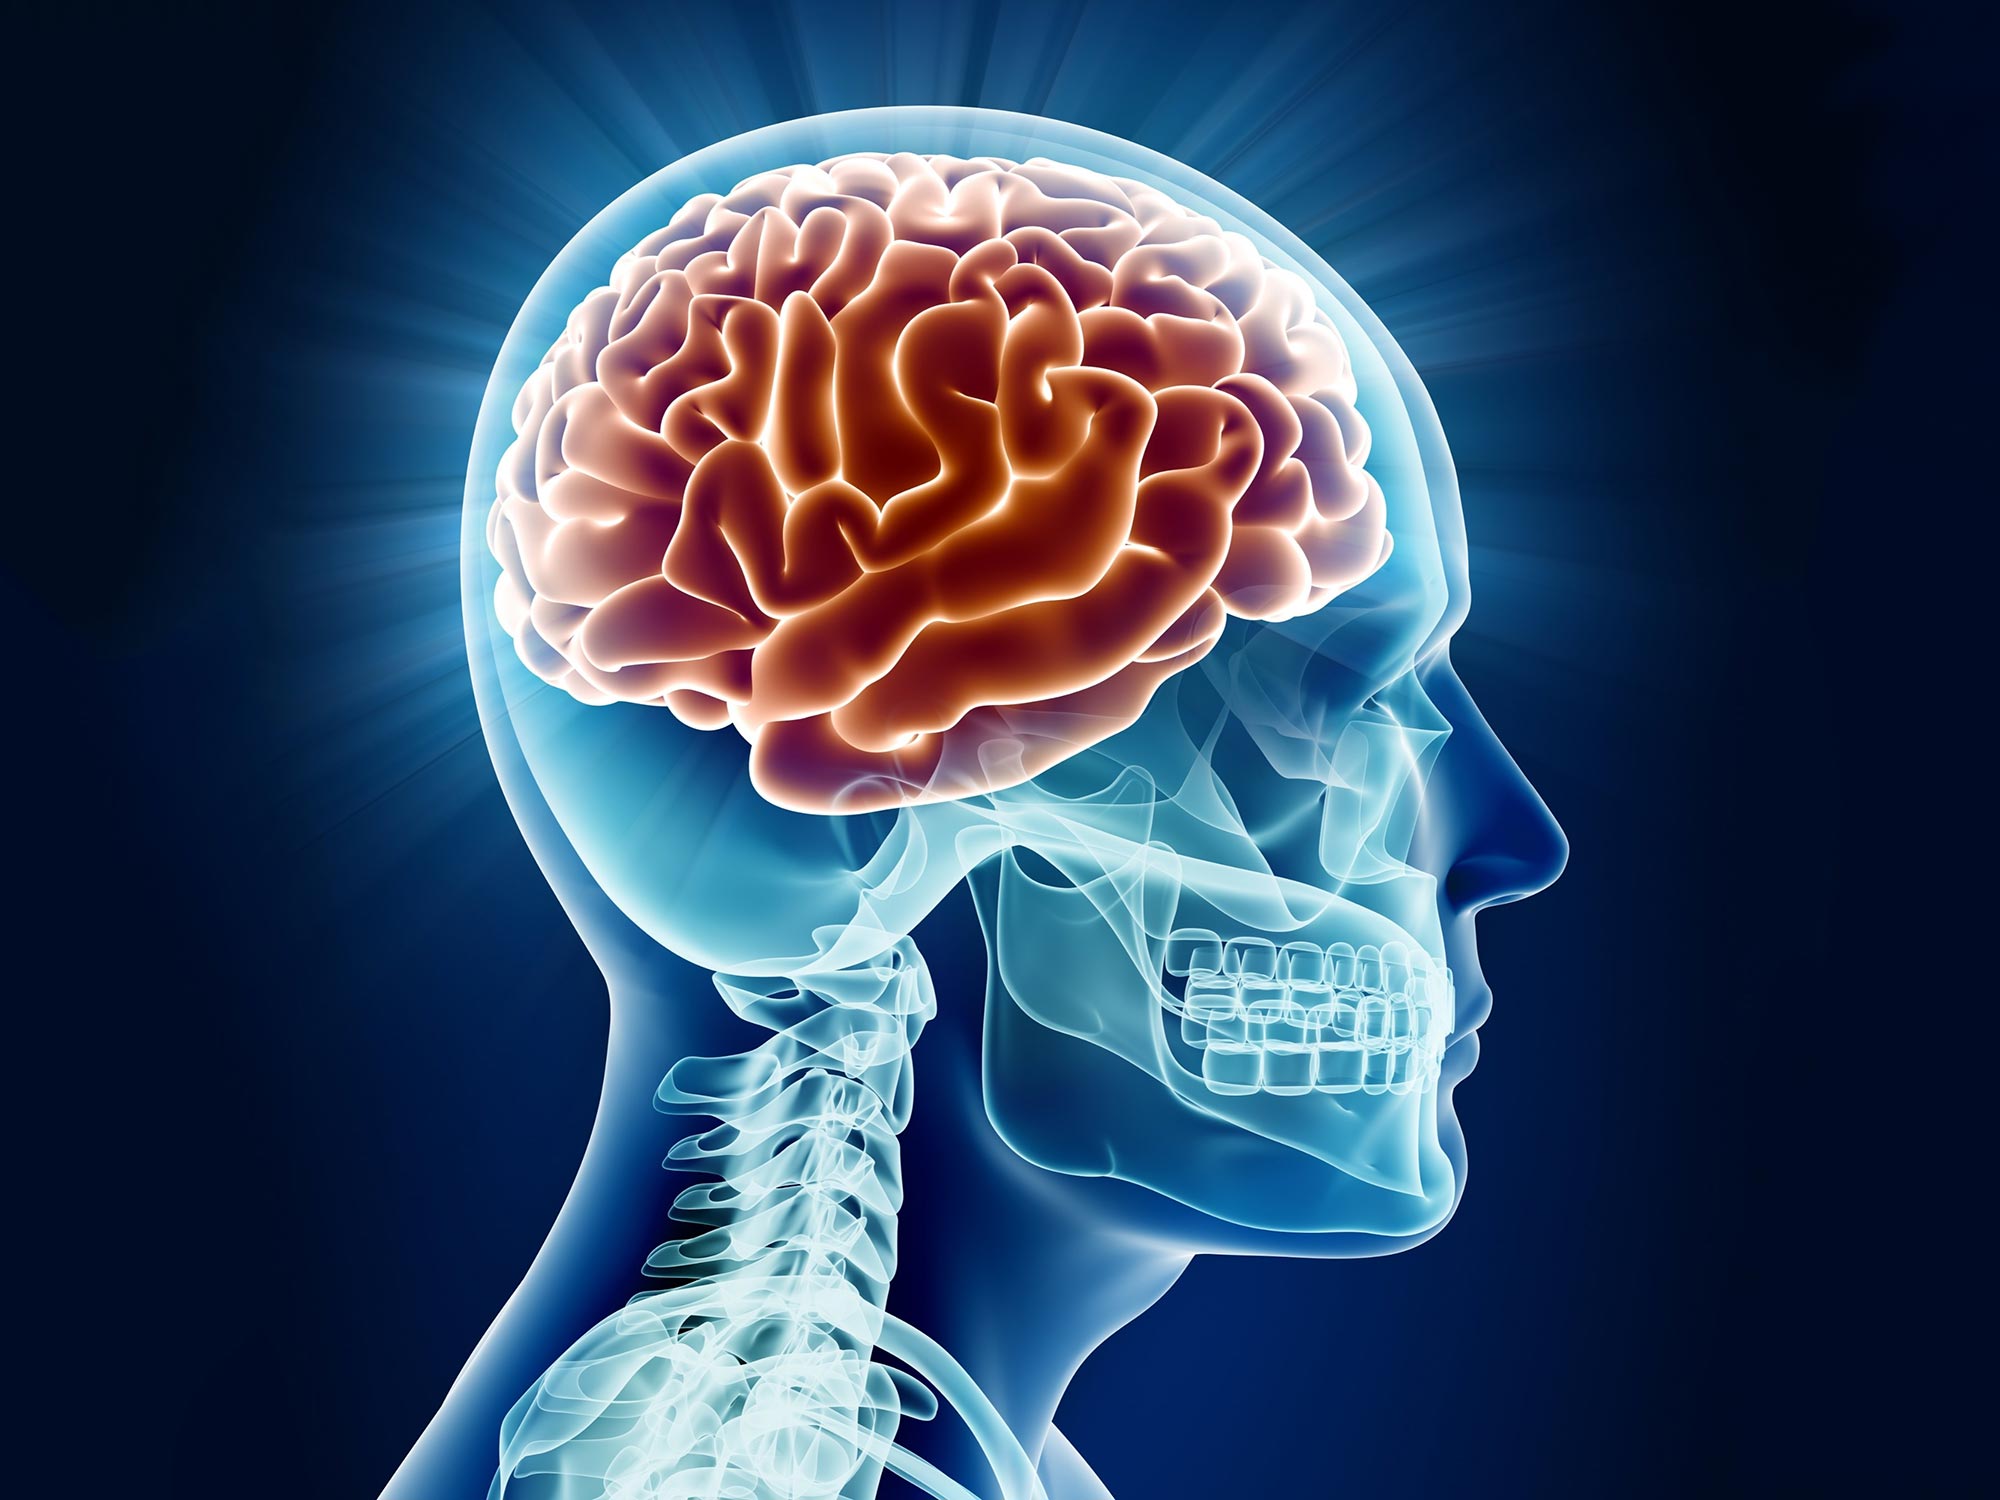 https://scitechdaily.com/images/Human-Brain-Anatomy-X-ray.jpg